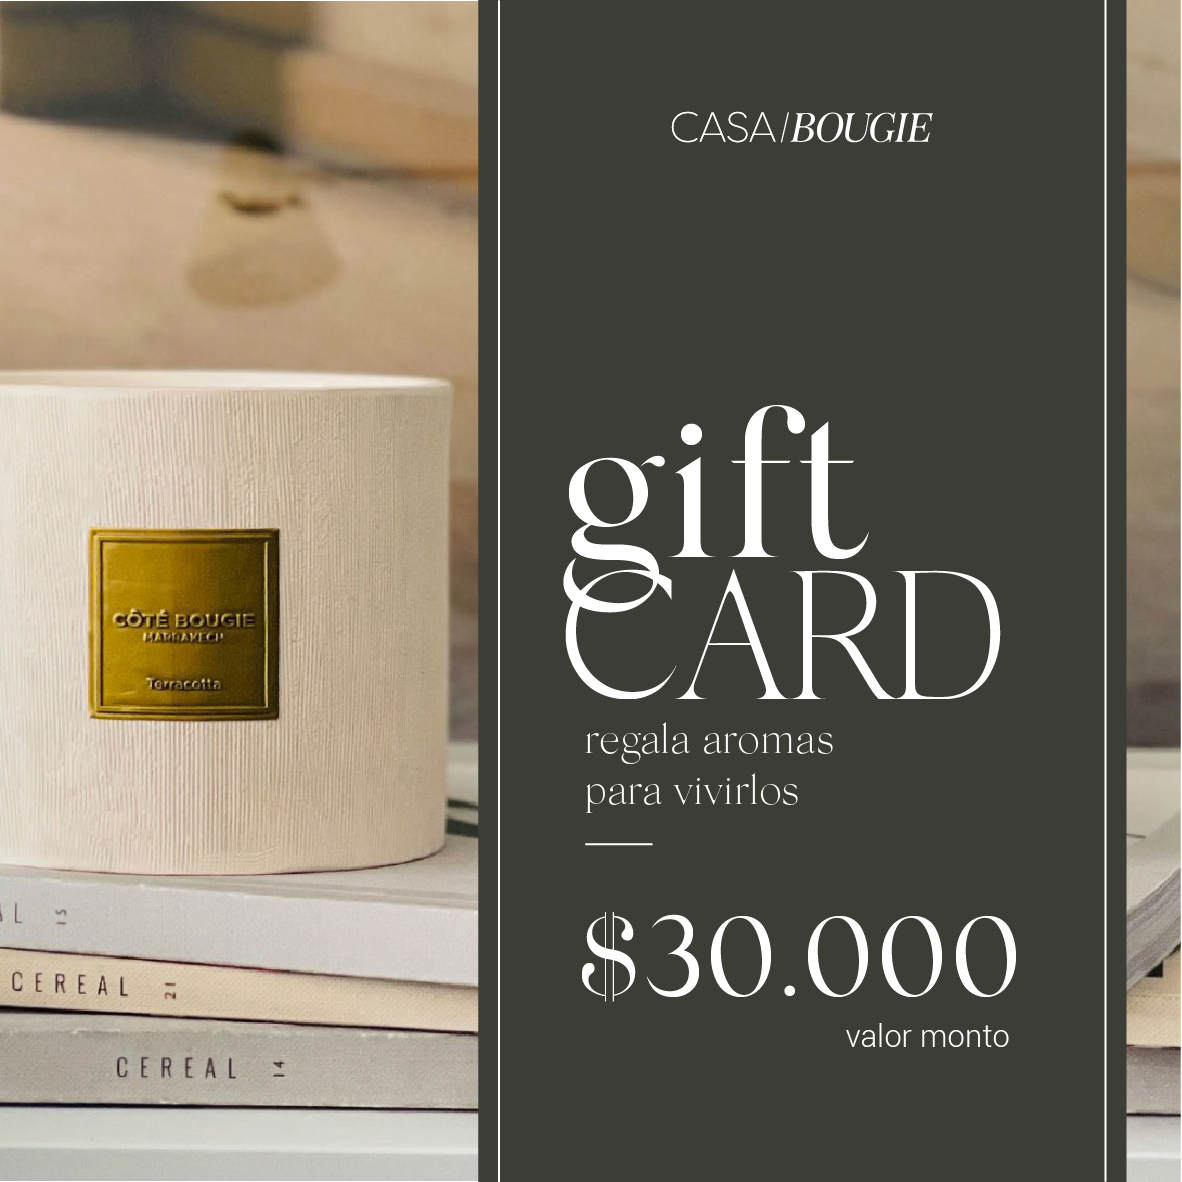 Gift Card CASA/BOUGIE